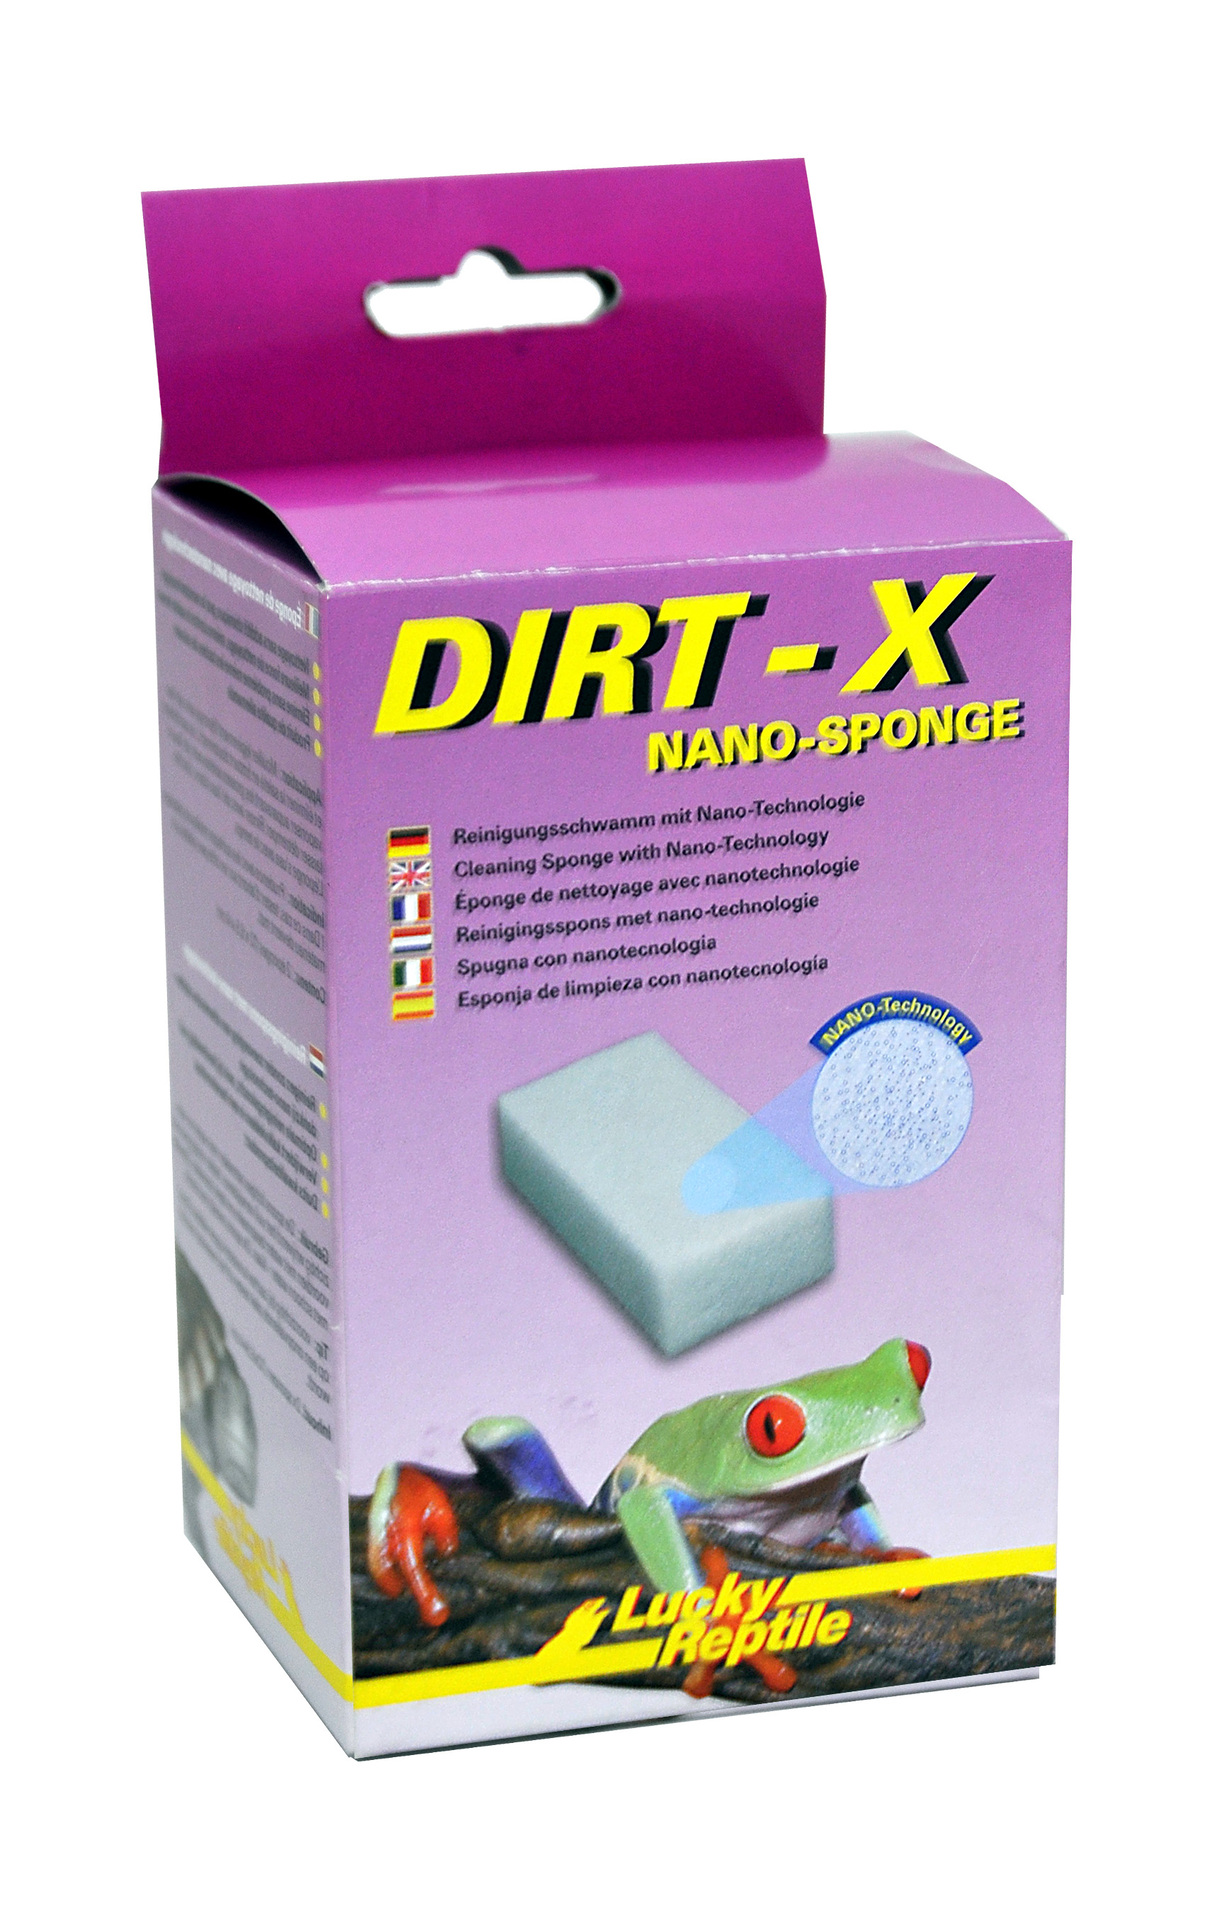 Import-Export Peter Hoch GmbH Dirt-X Nanosponge